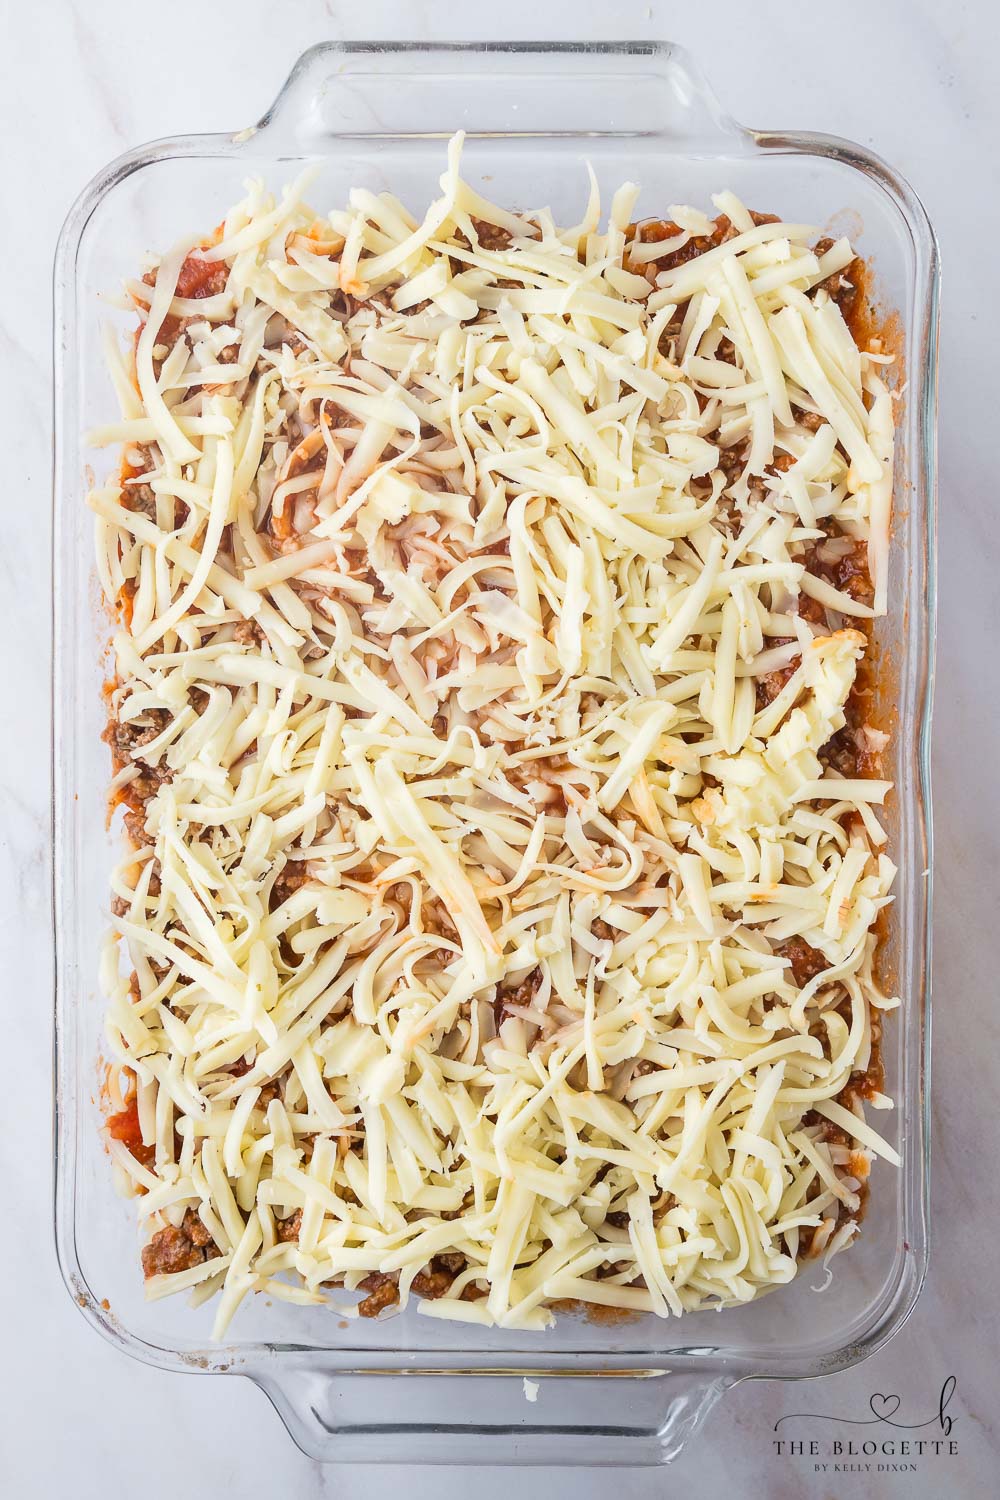 Shredded mozzarella cheese on top of lasagna